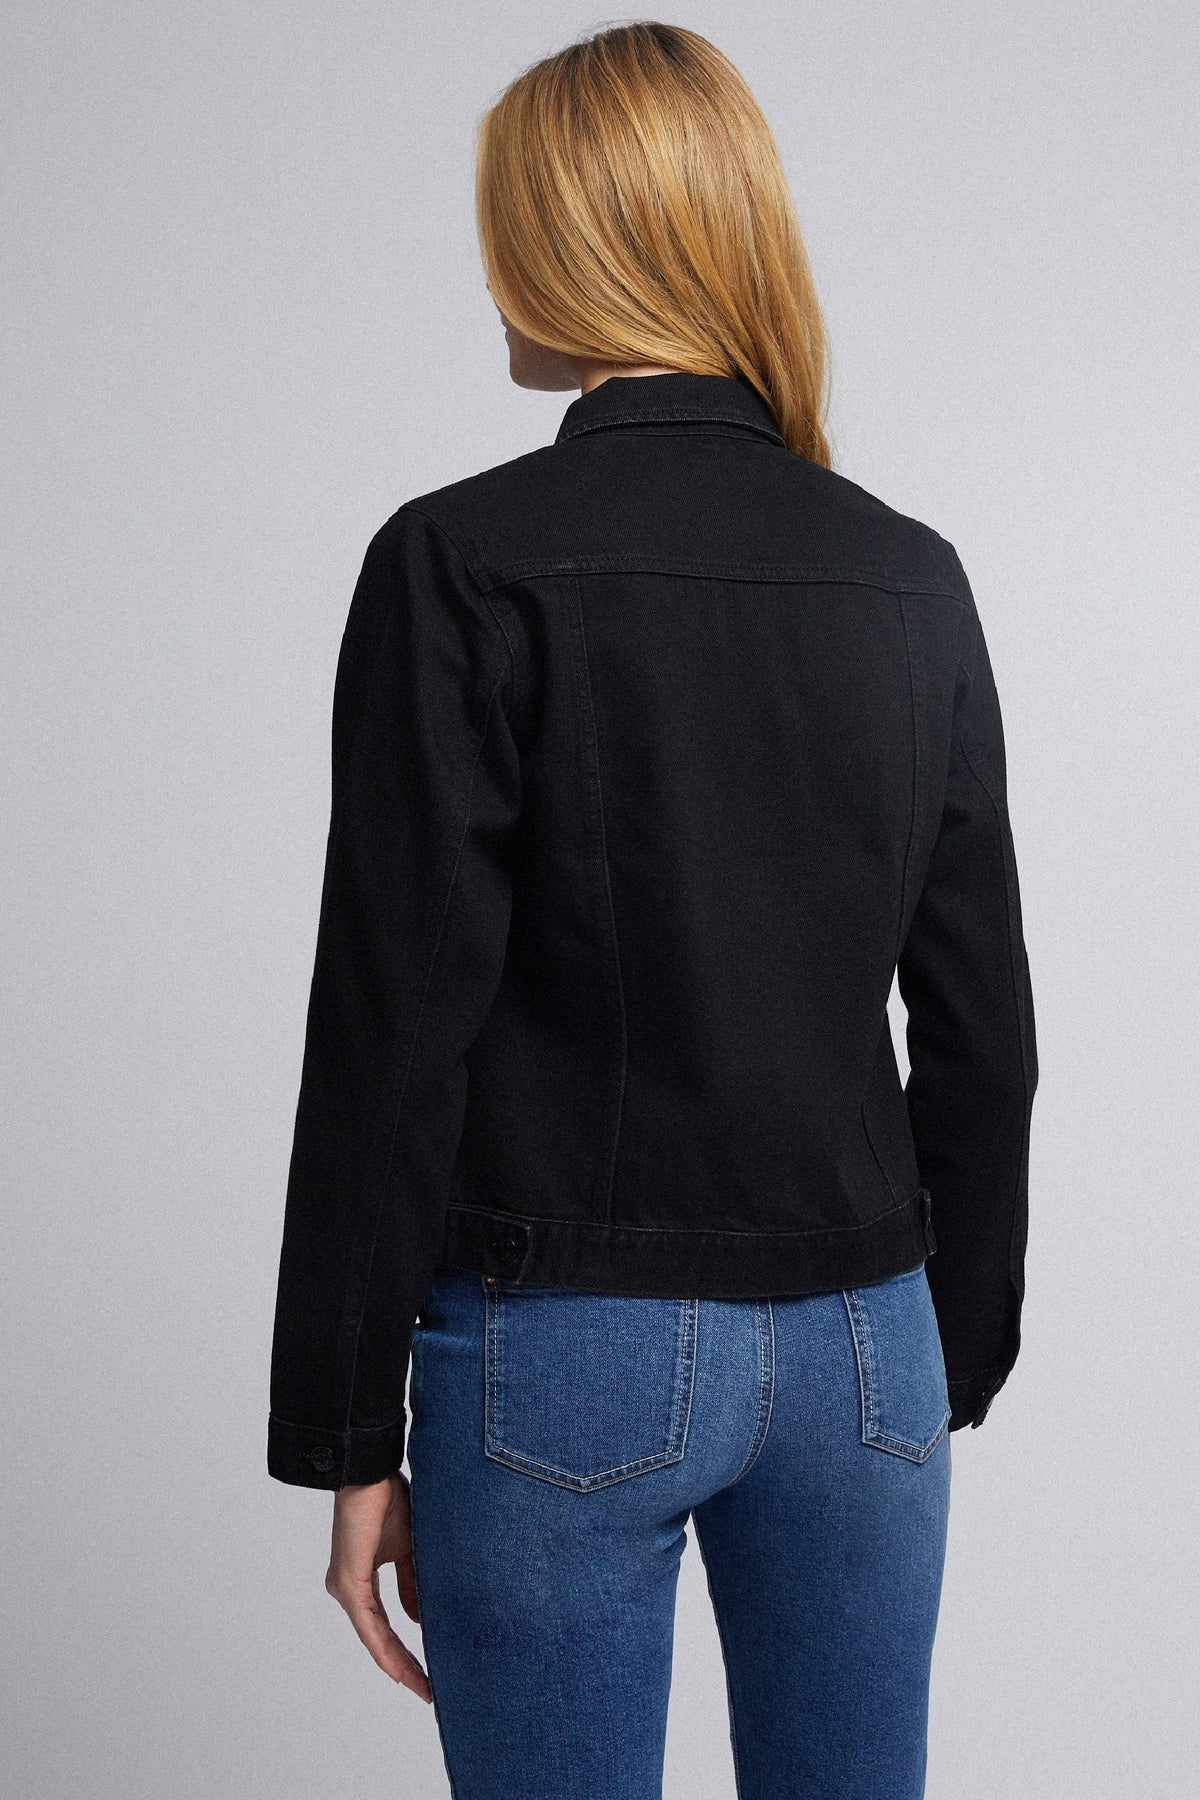 Organic Jacket: Stylish black denim jacket for fashionable women, featuring modern design and versatile wear.